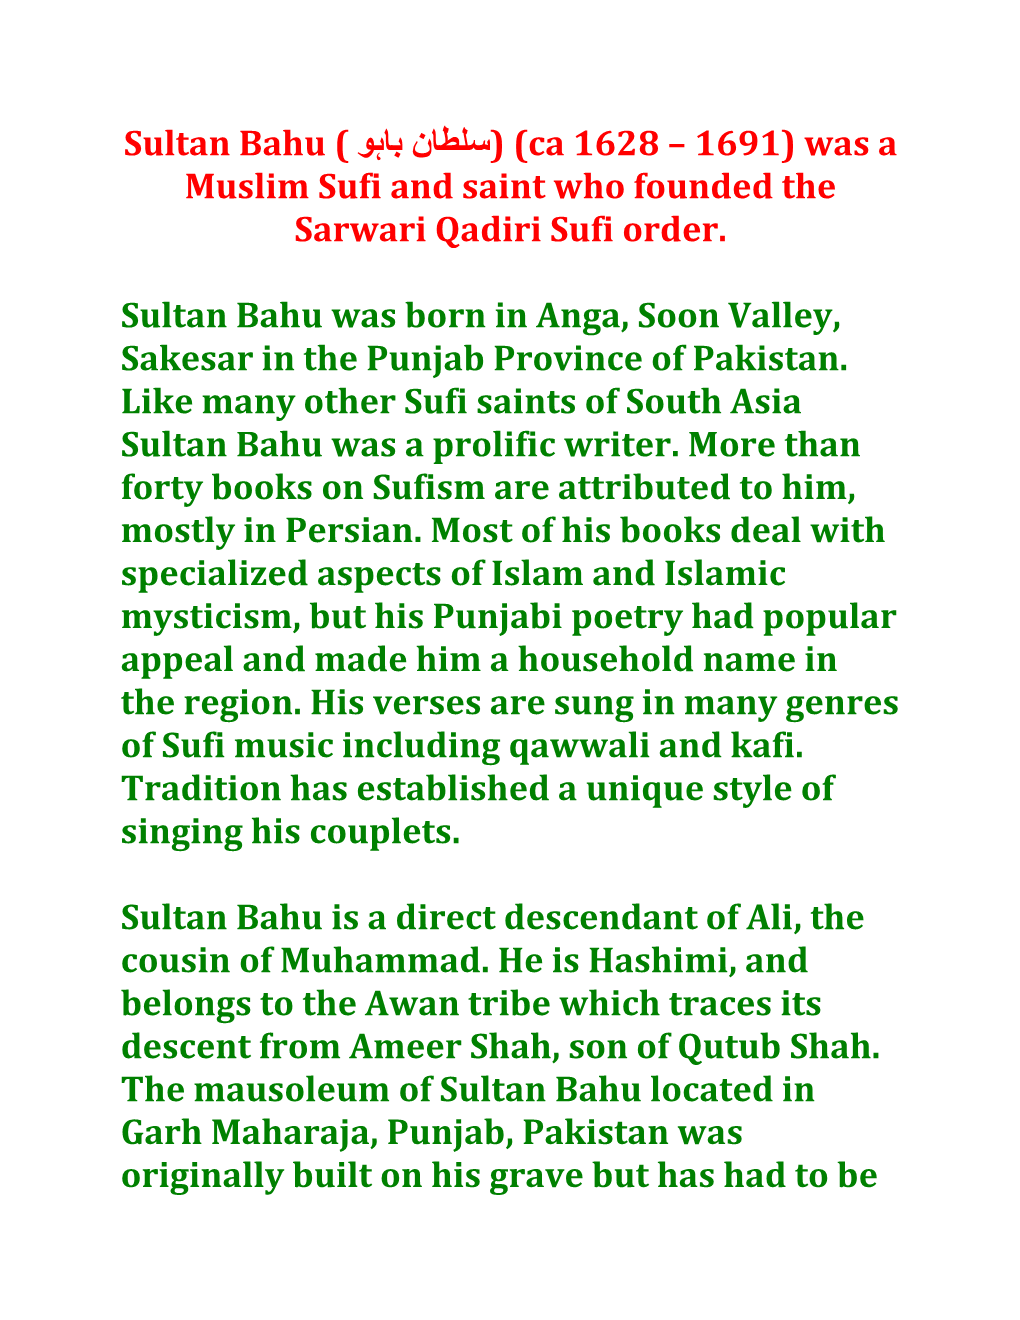 Sultan Bahu ( وﮨﺎﺑ نﺎطﻟﺳ) (Ca 1628 – 1691) Was a Muslim Sufi and Saint